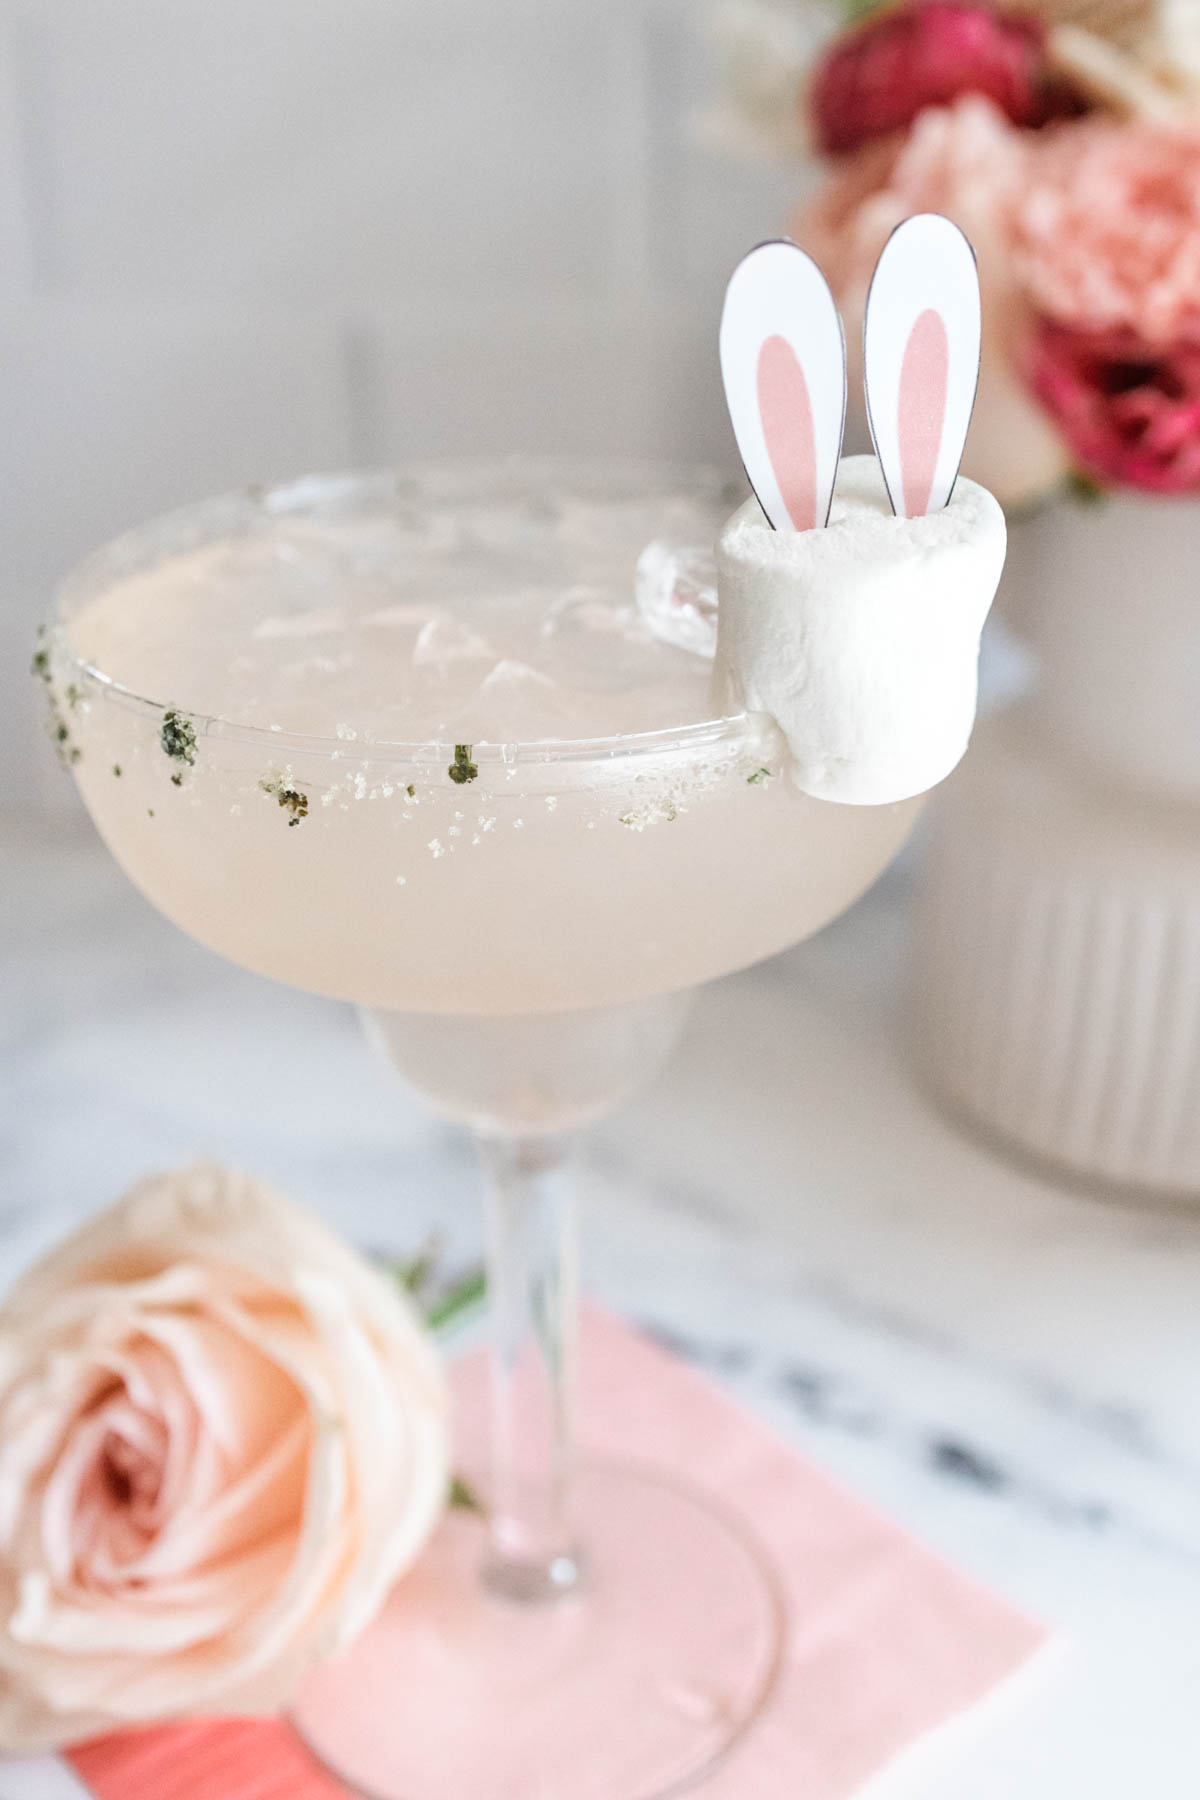 Strawberry Lemonade margarita in a margarita glass with a bunny ear garnish for Easter.